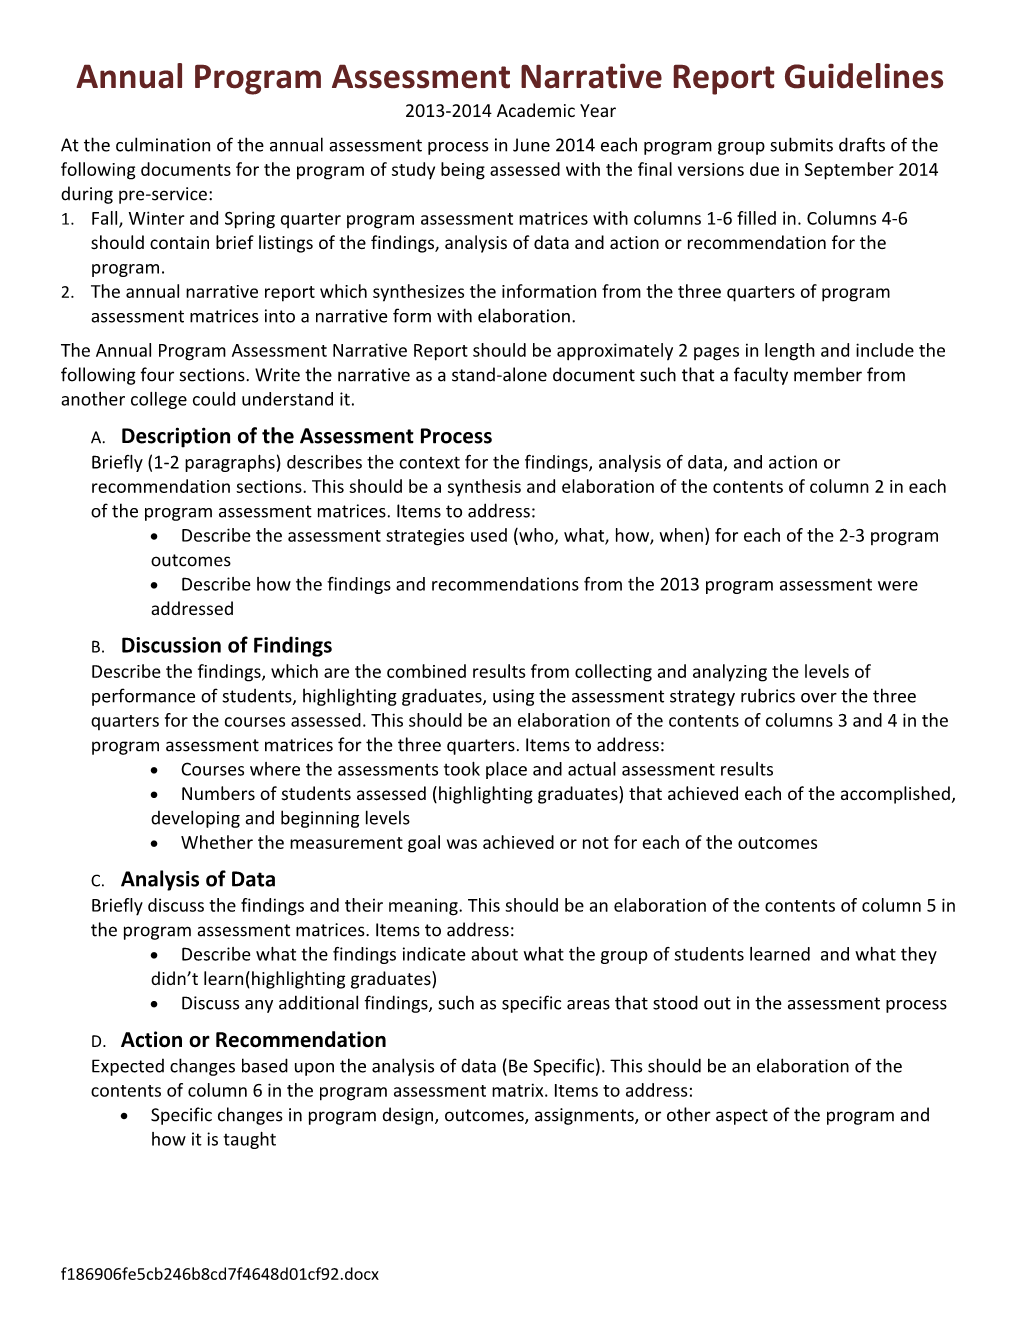 Annual Program Assessment Narrative Report Guidelines